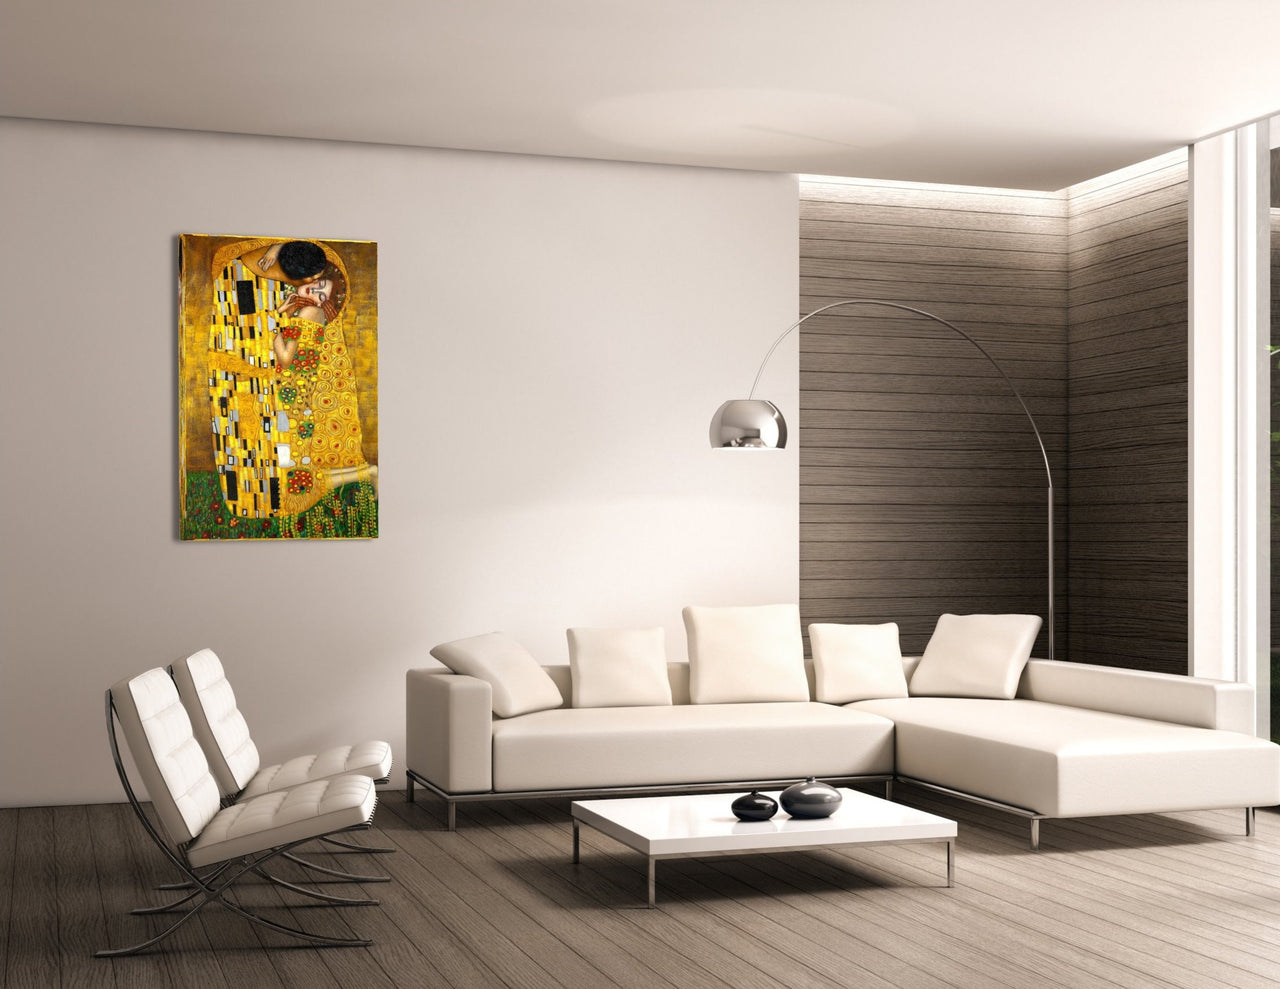 Piet Mondrian - Tree - Get Custom Art